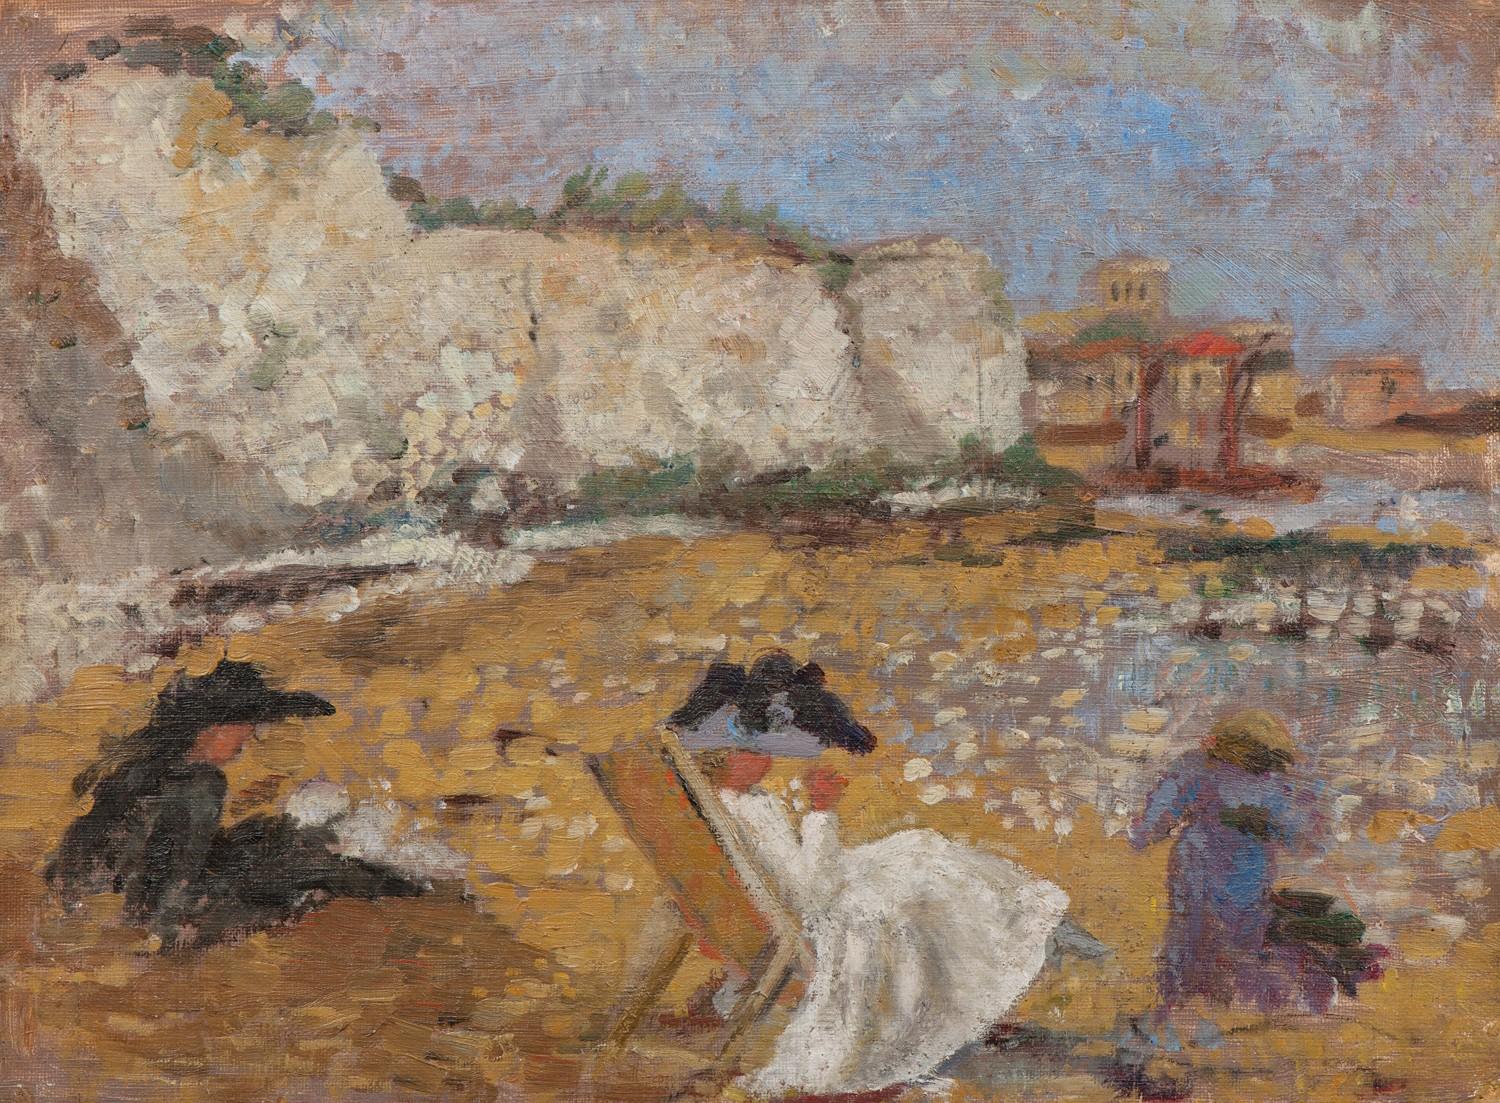 Ethel Sands Landscape Art - On the Beach, Post-Impressionist Oil Painting, English School